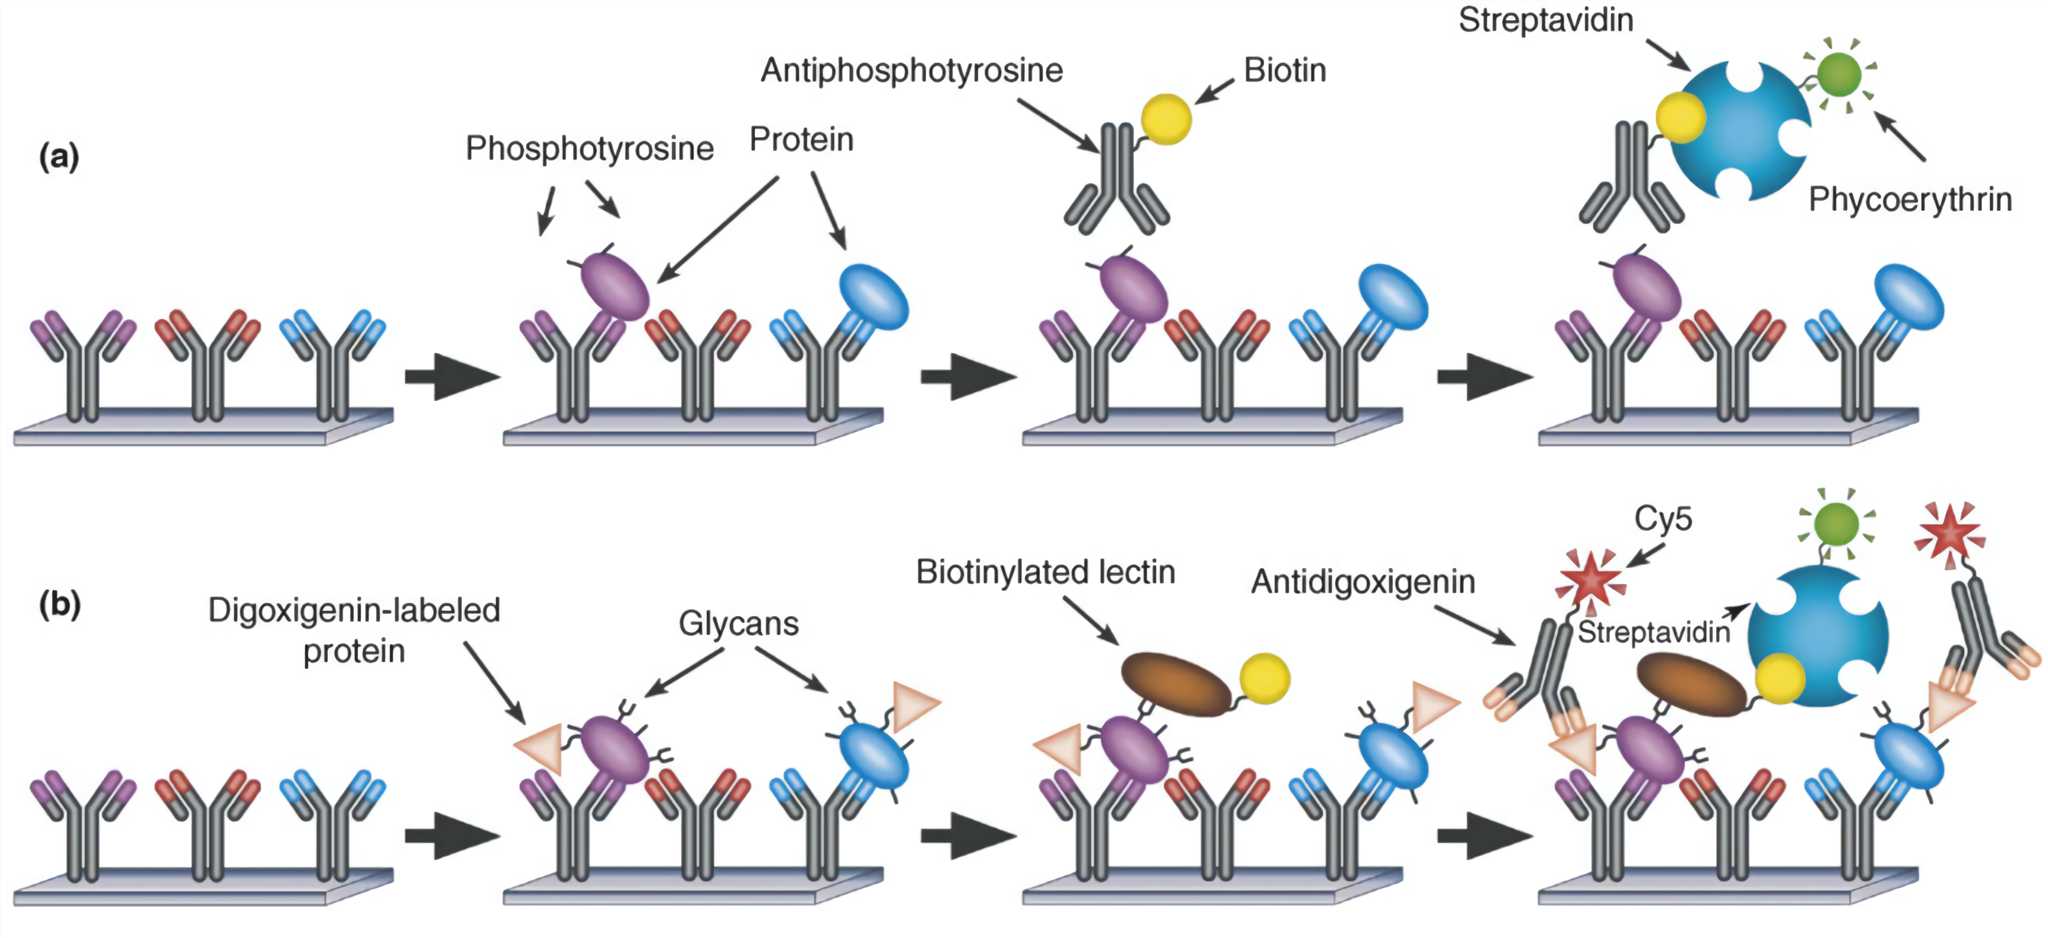 The detection of phosphorylation and glycosylation on antibody arrays.